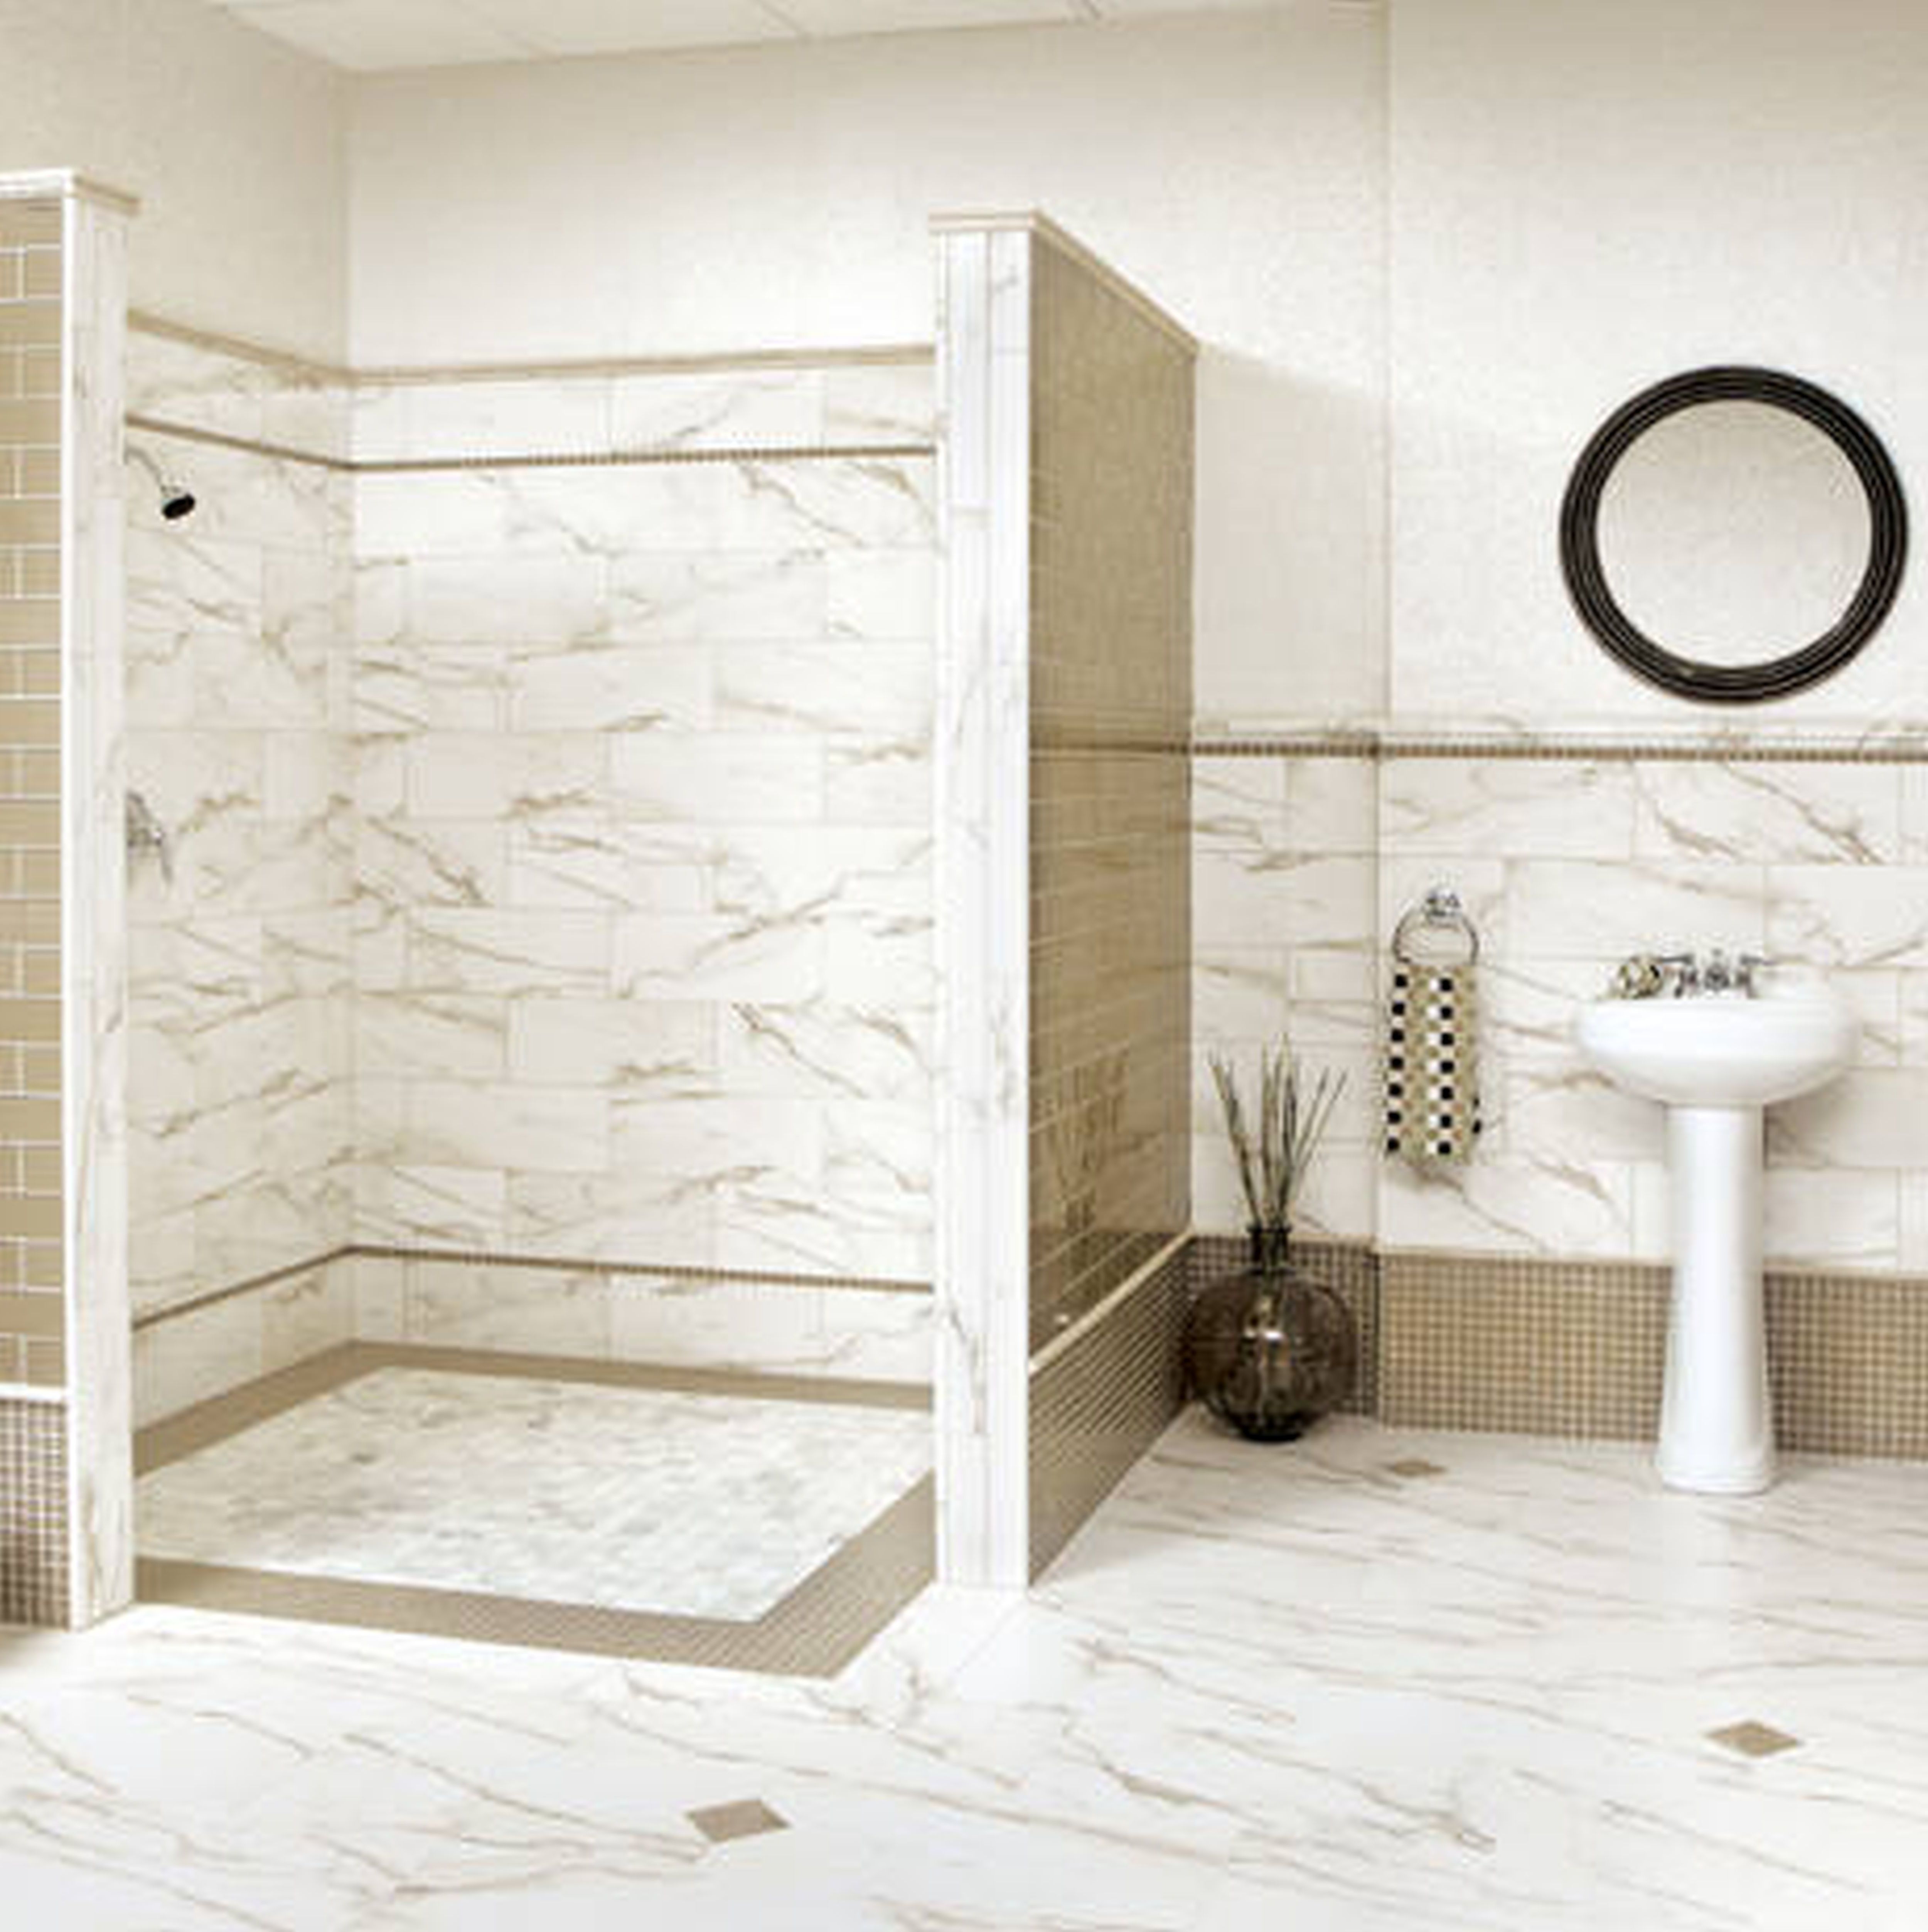 Bathroom Design Ideas For Small Bathrooms great ideas for small